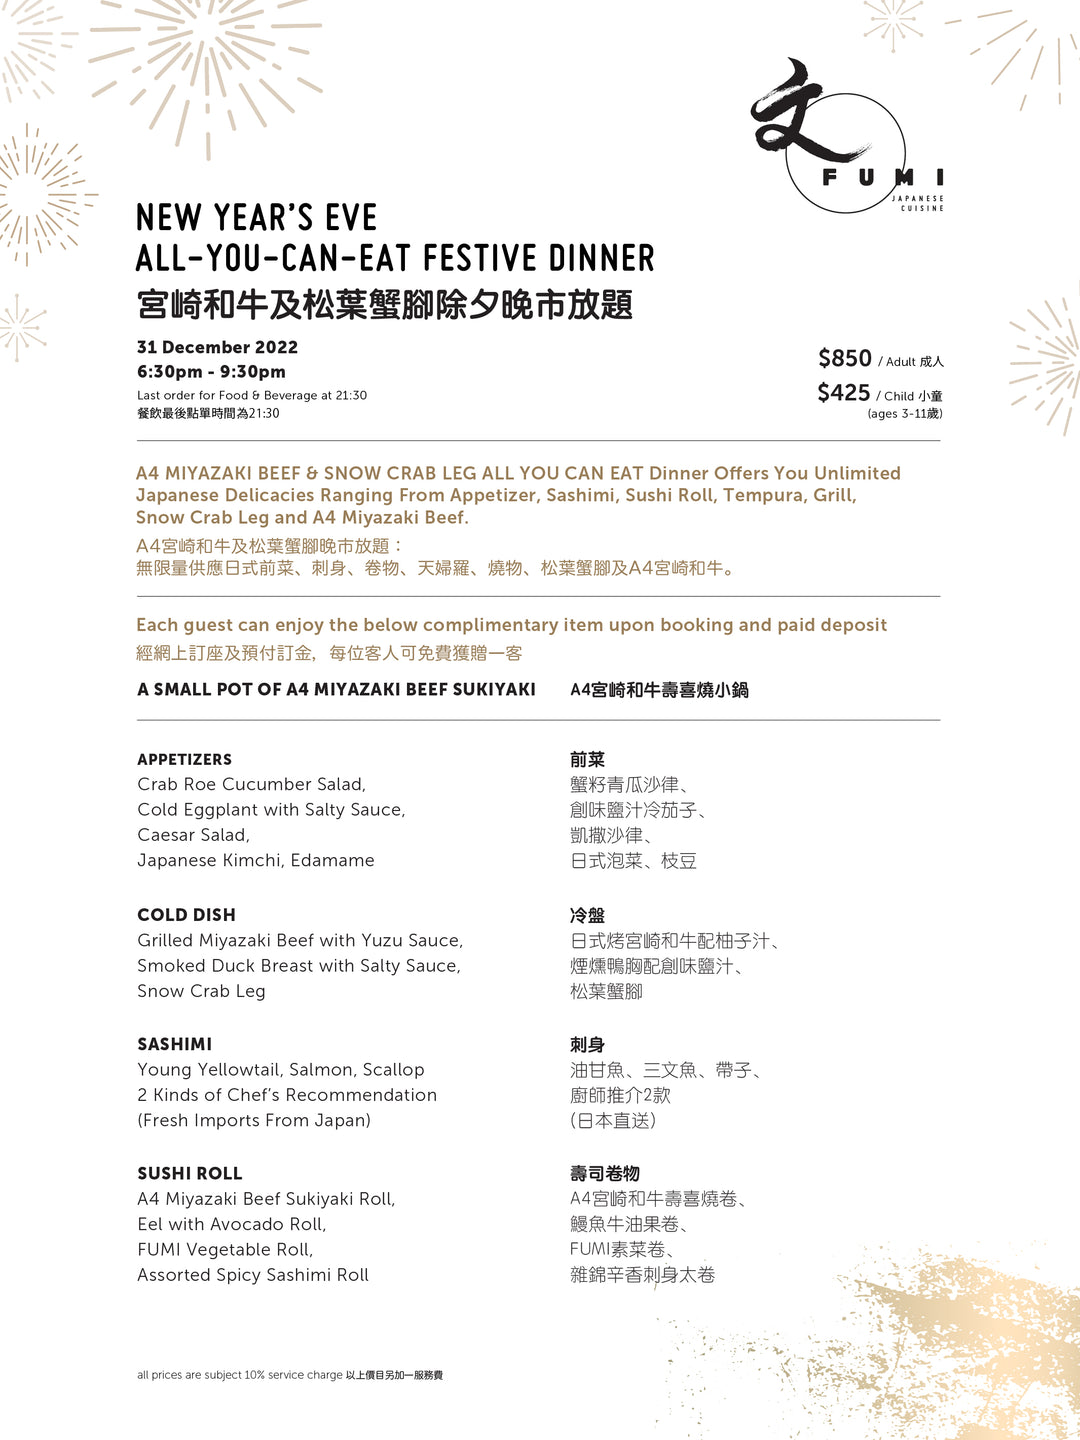 FUMI New Year's Eve Dinner (December 31)